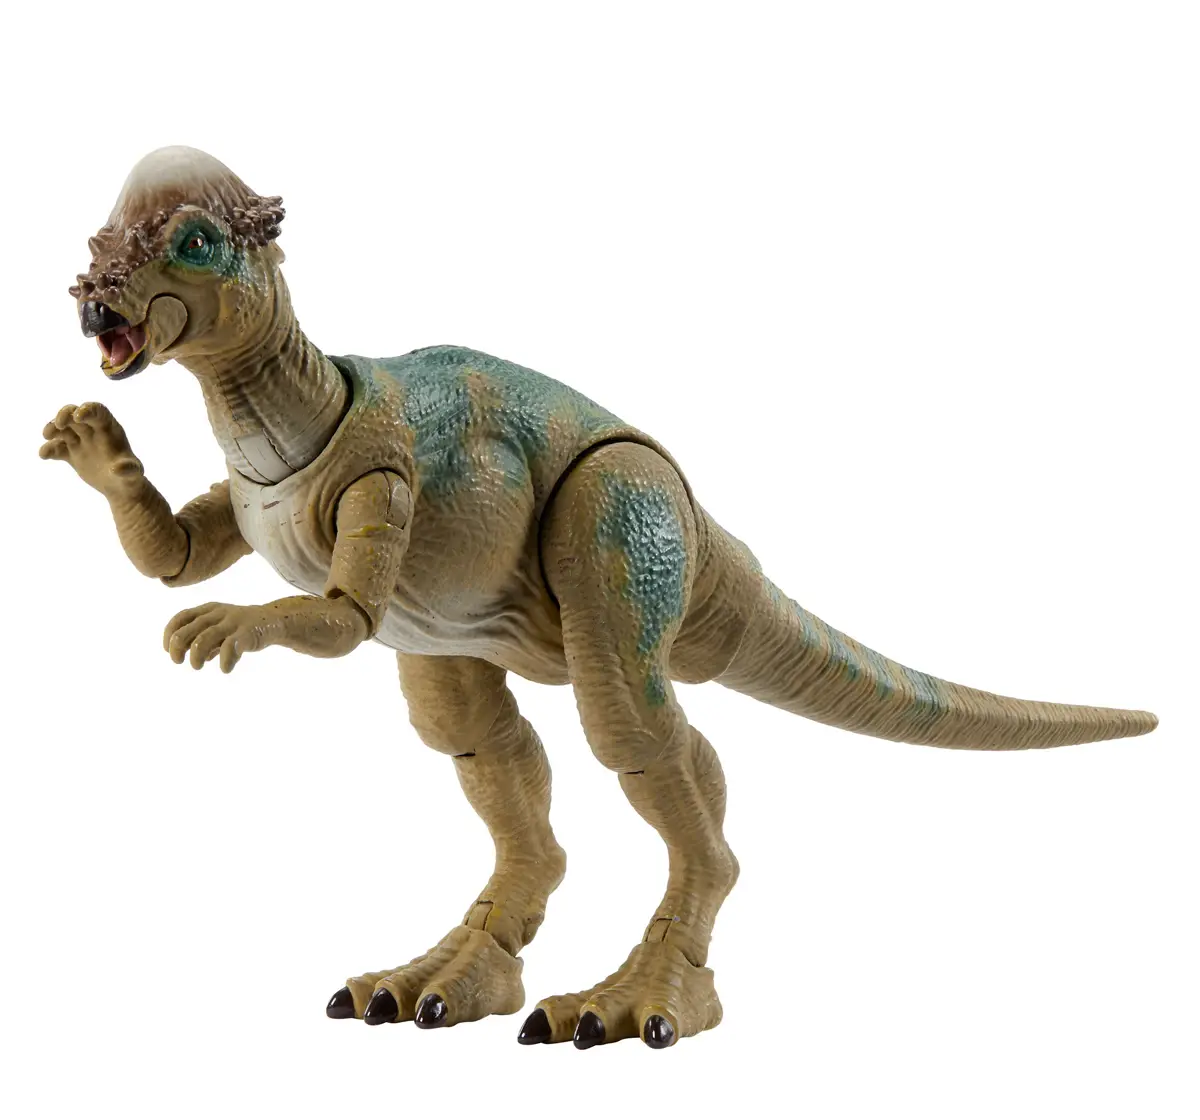 Jurassic World The Lost World Jurassic Park Dinosaur Figure Pachycephalosaurus Hammond Collection, Kids for 8Y+, Multicolour